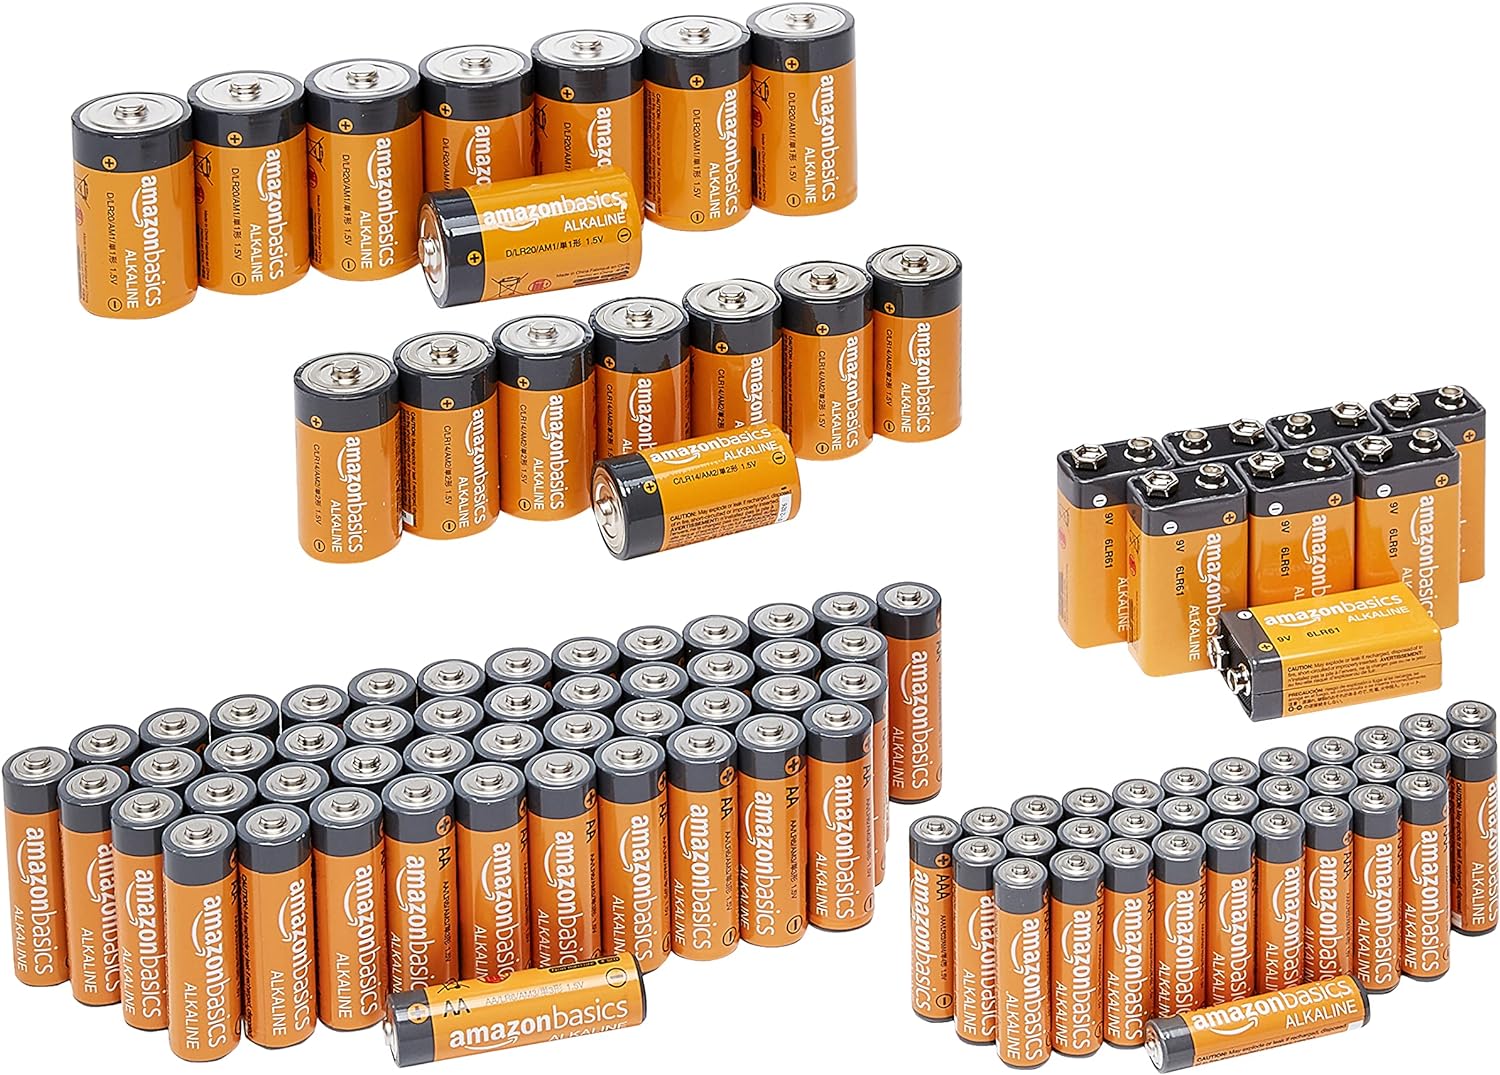 $38.10: Amazon Basics 108 Count Alkaline Battery Super Value Pack - 48 AA + 36 AAA + 8 C + 8 D + 8 9Volt at Amazon